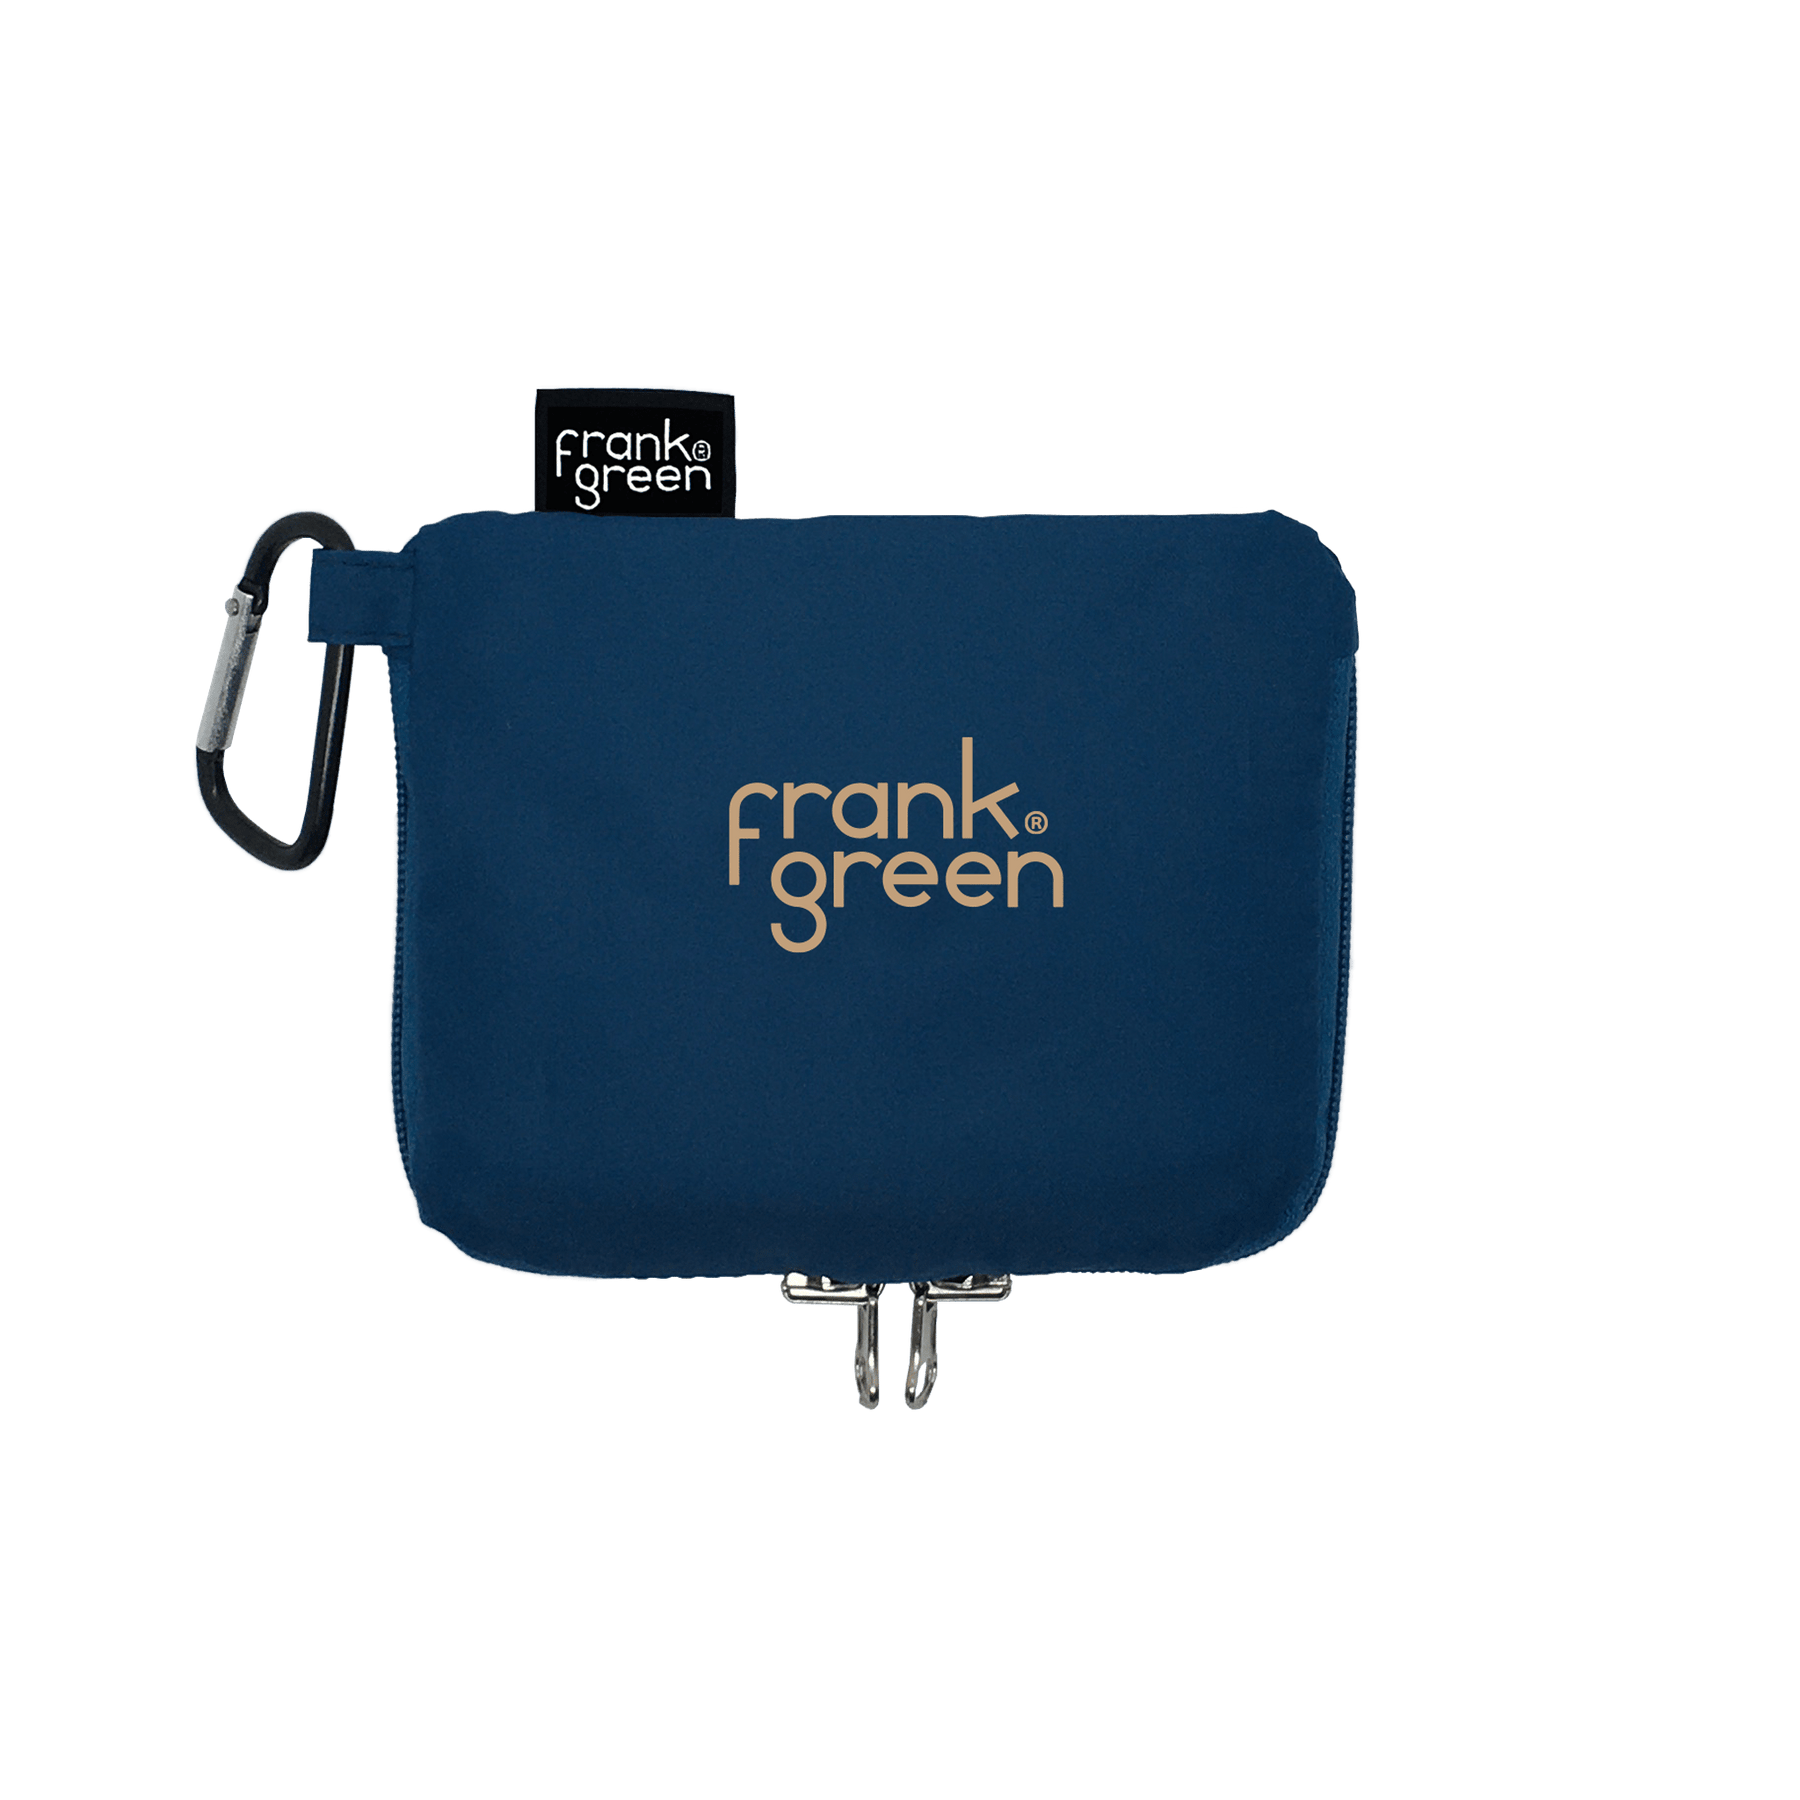 Frank Green Deep Ocean Ultimate Reusable 3-in-1 Bag - Reusable Tote Bag, Backpack, Shopping Bag, Multiple Colors